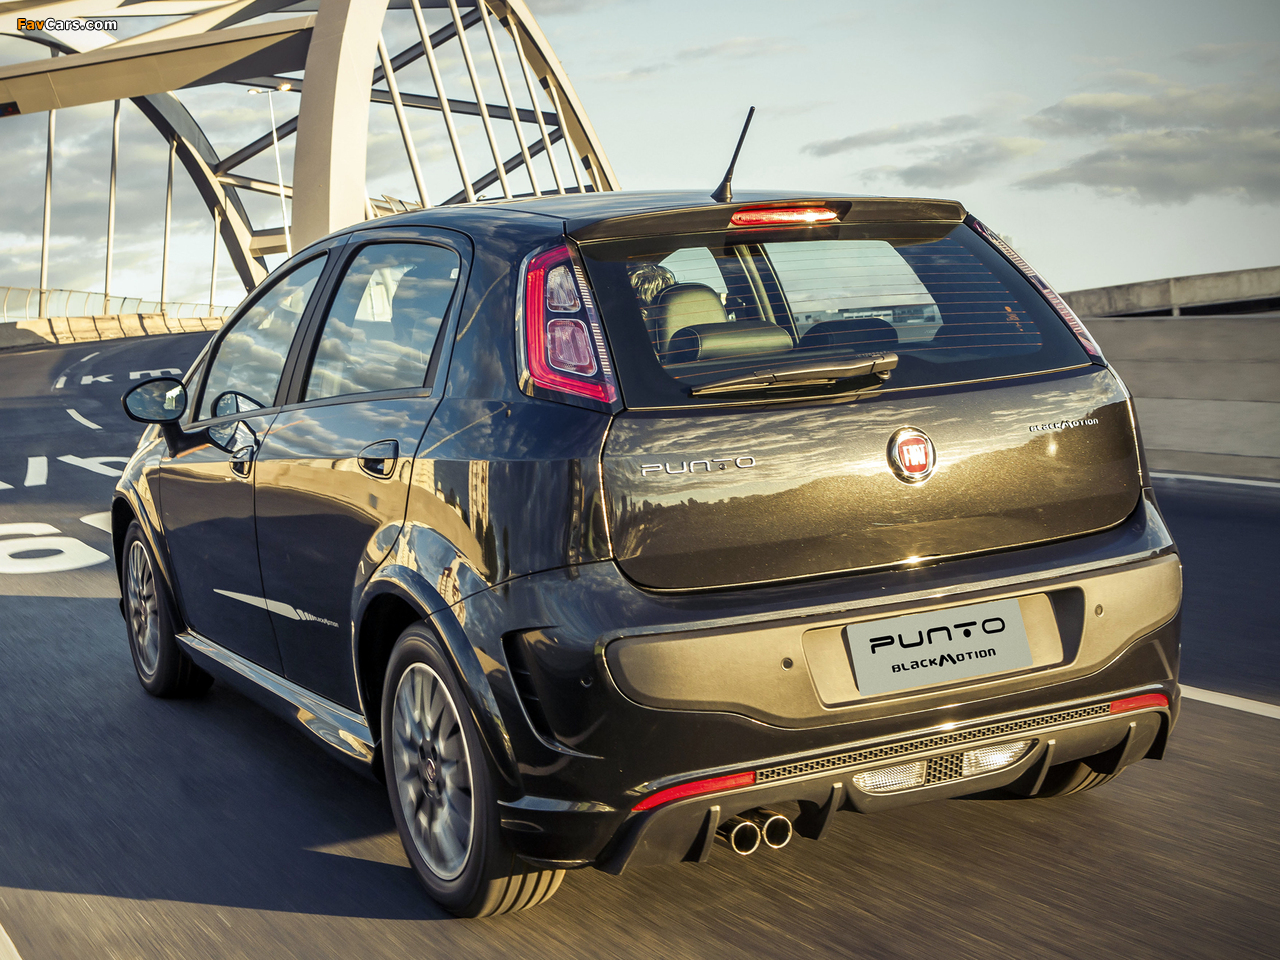 Fiat Punto BlackMotion (310) 2013 images (1280 x 960)